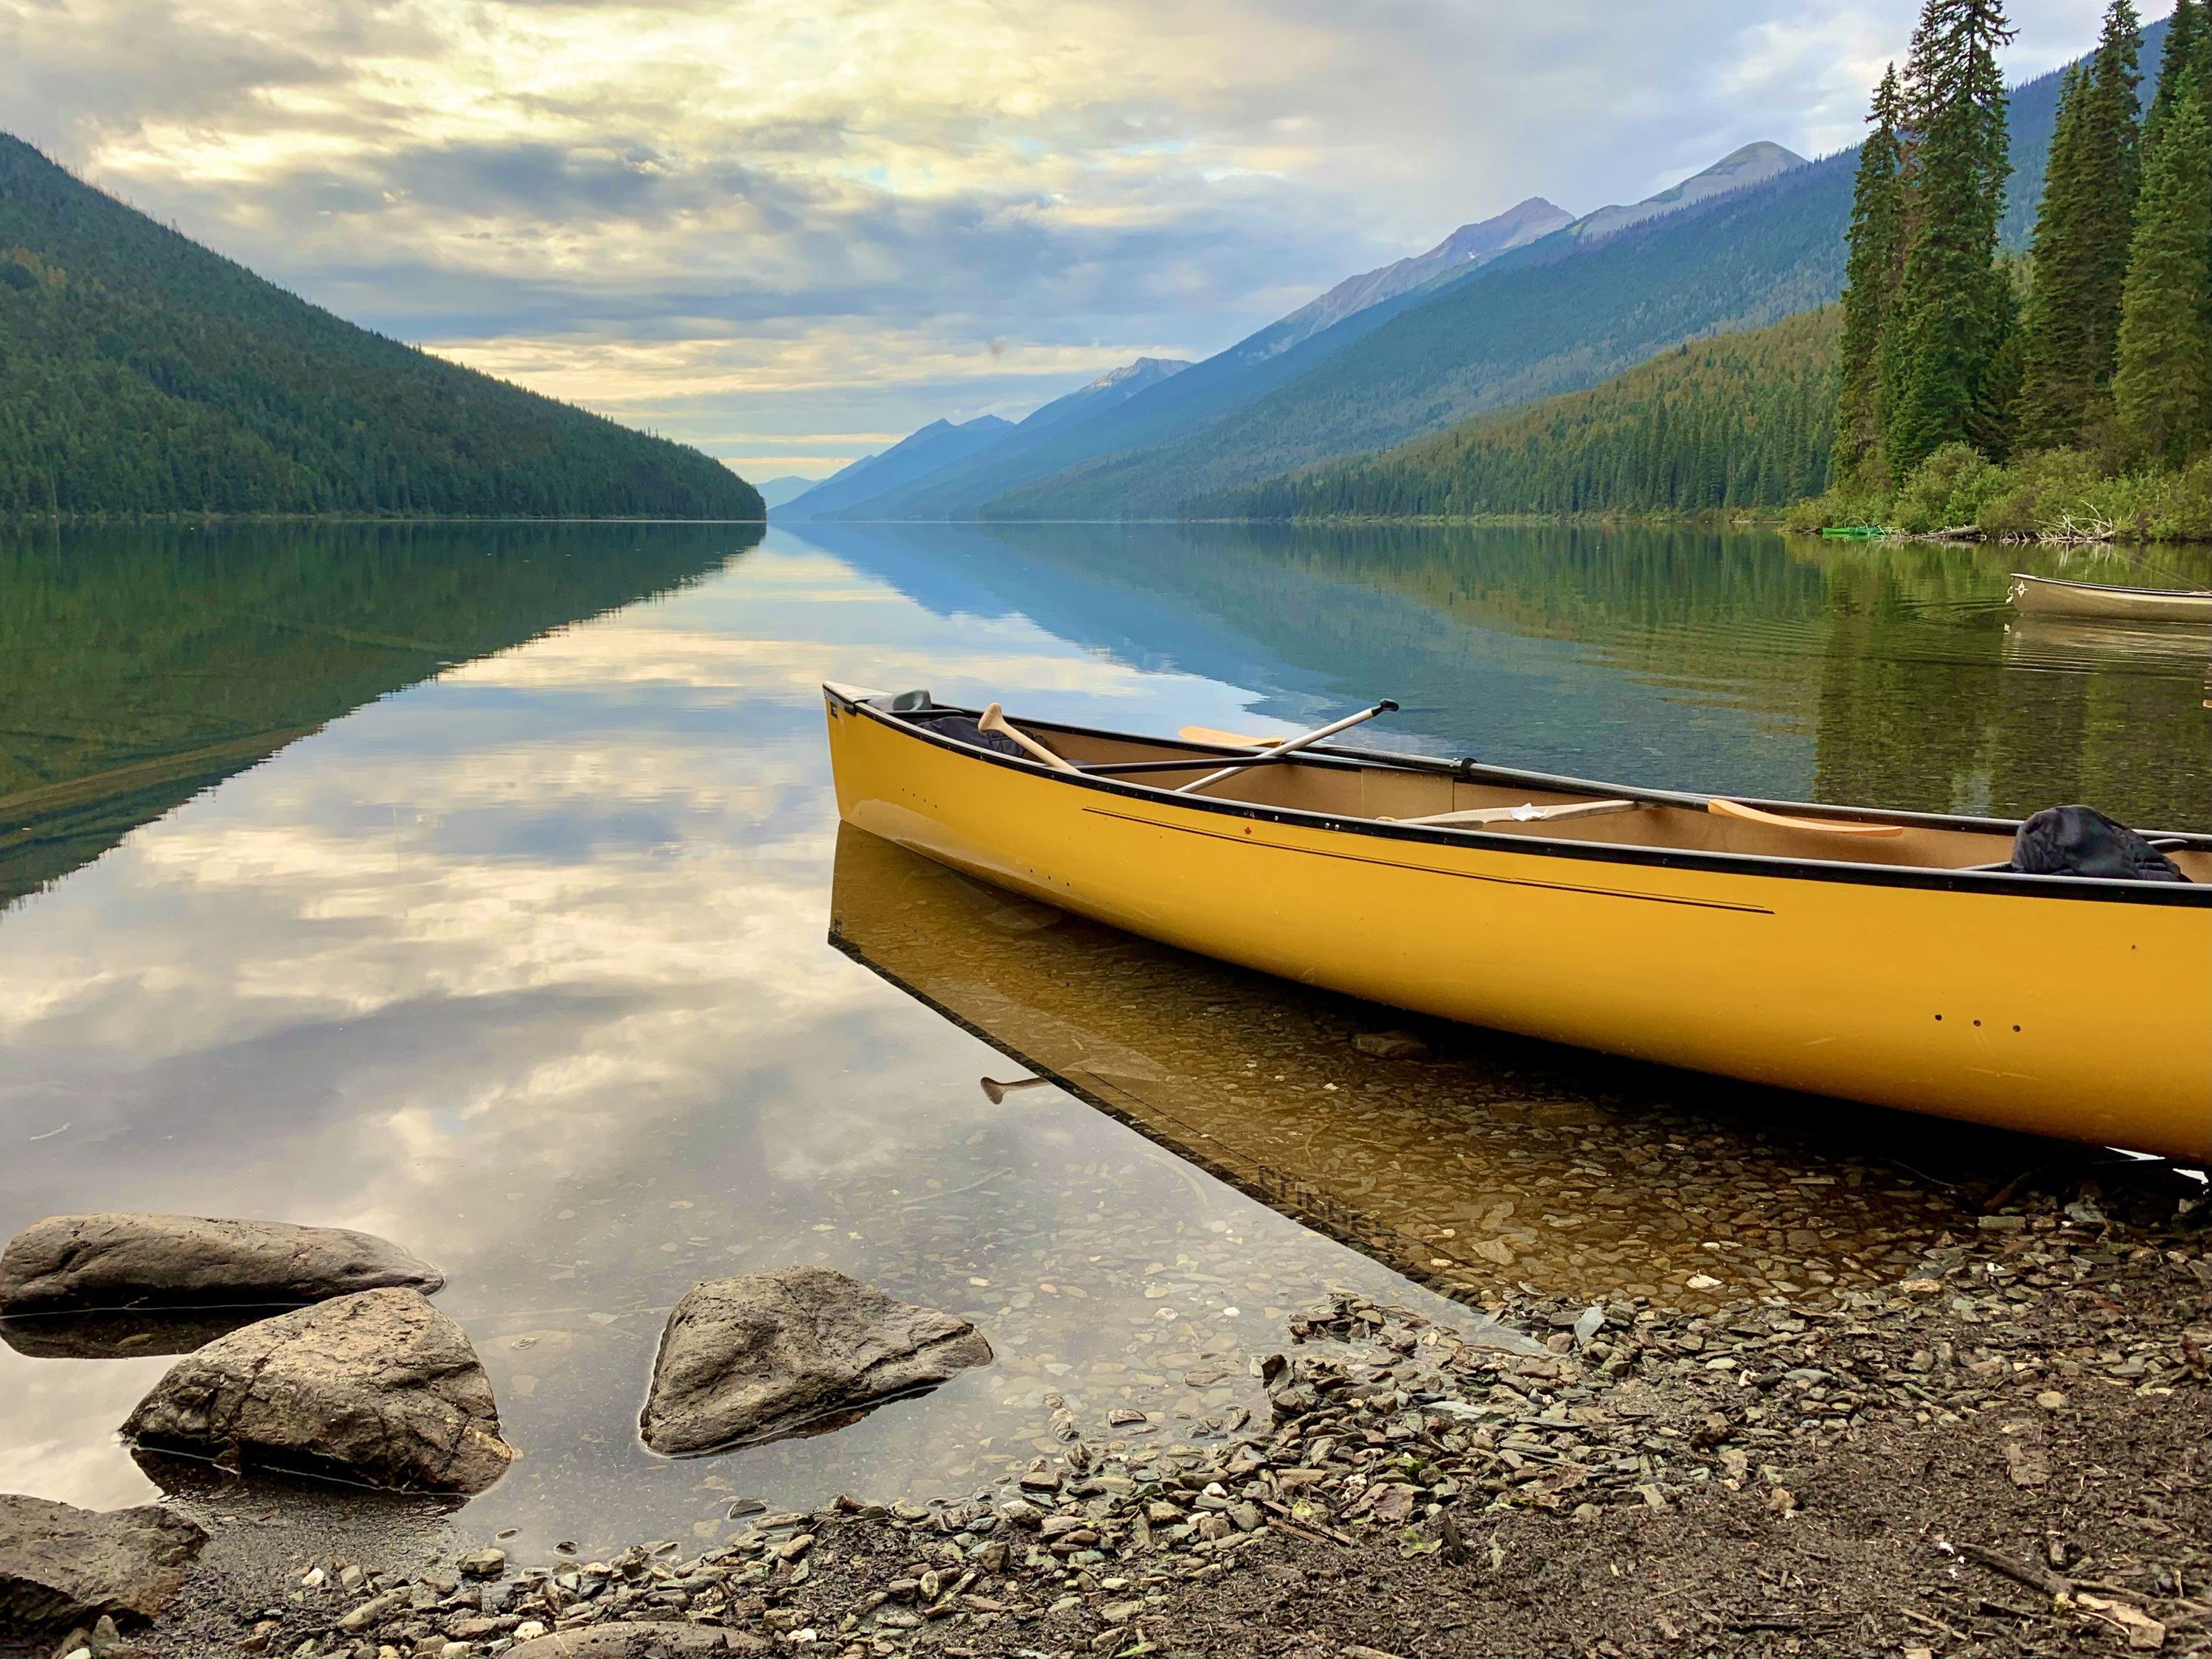 A canoe by a lake